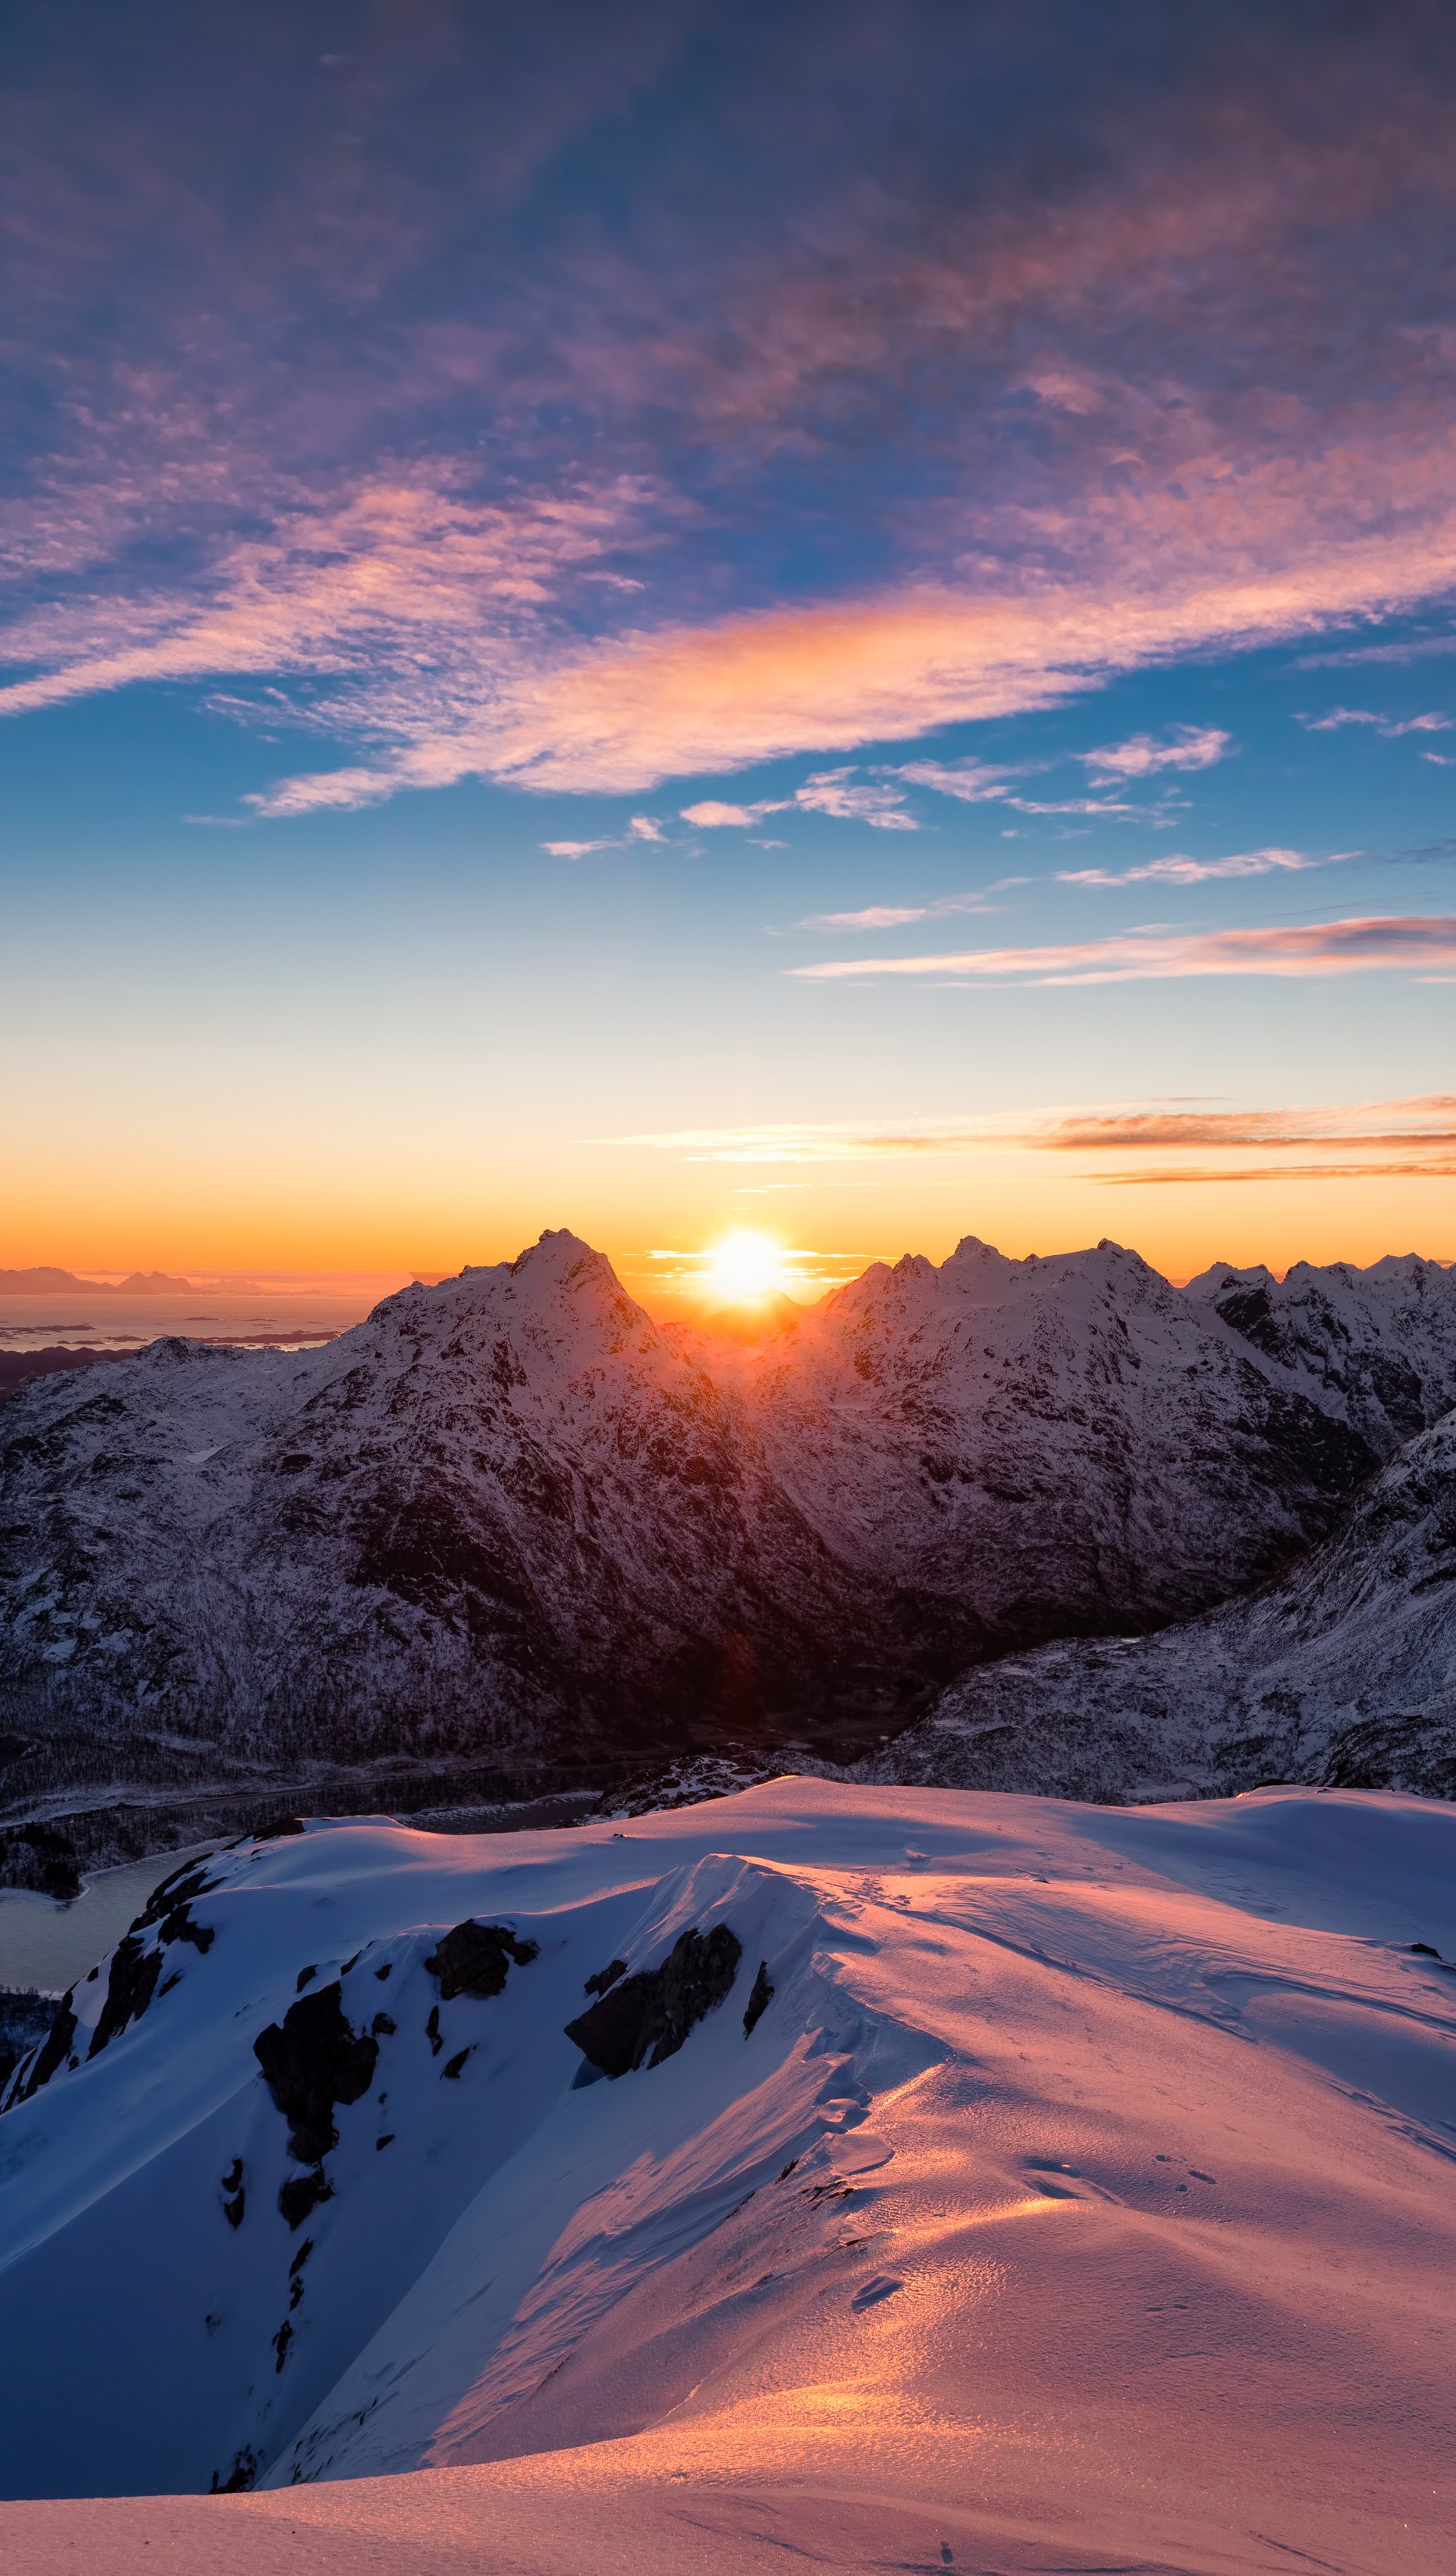 Sunset in snowy mountains Wallpaper 5k Ultra HD ID:7588